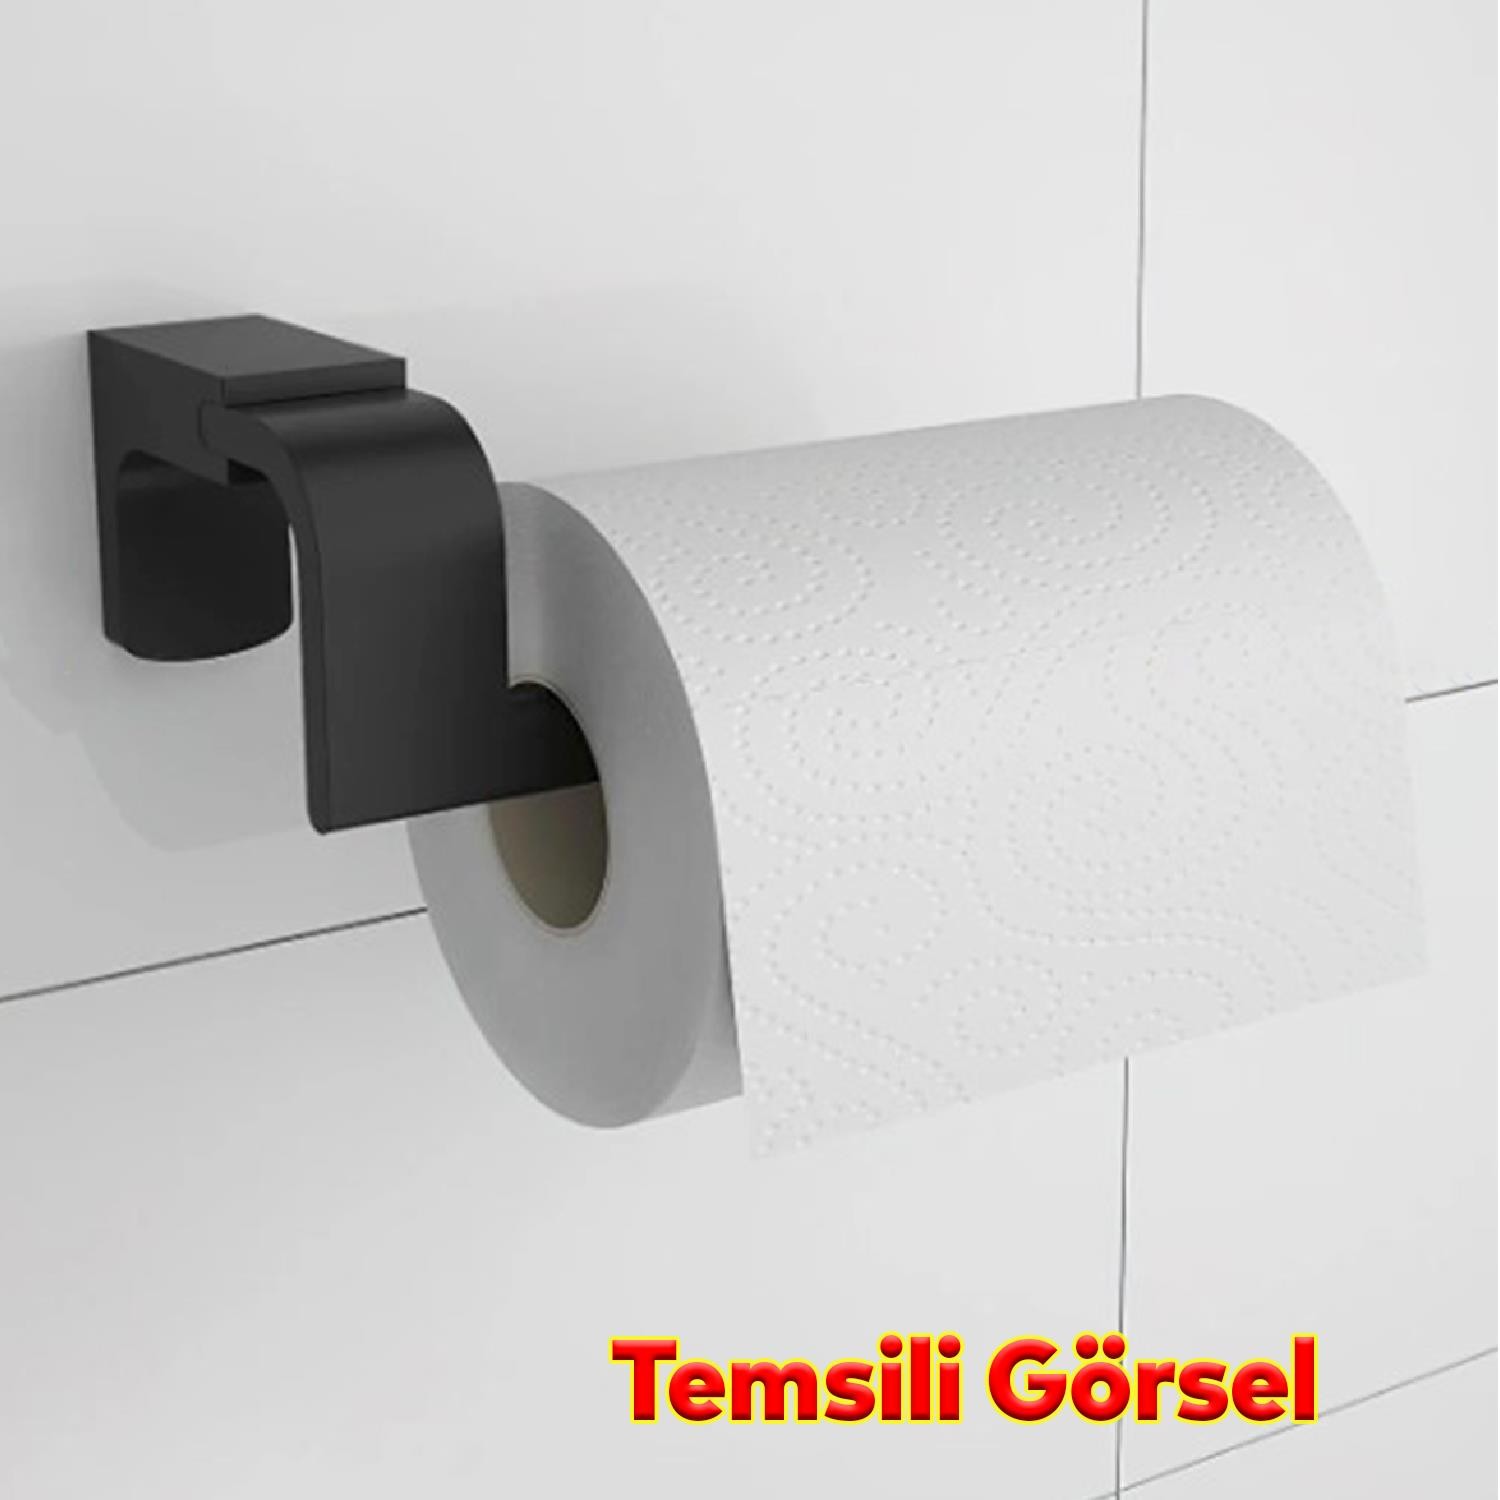 Metal Sağlam Vidalı Siyah Renk Kağıtlık Aparat Banyo Wc Tuvalet Kağıt Kağıtlık Standı Paslanmaz 